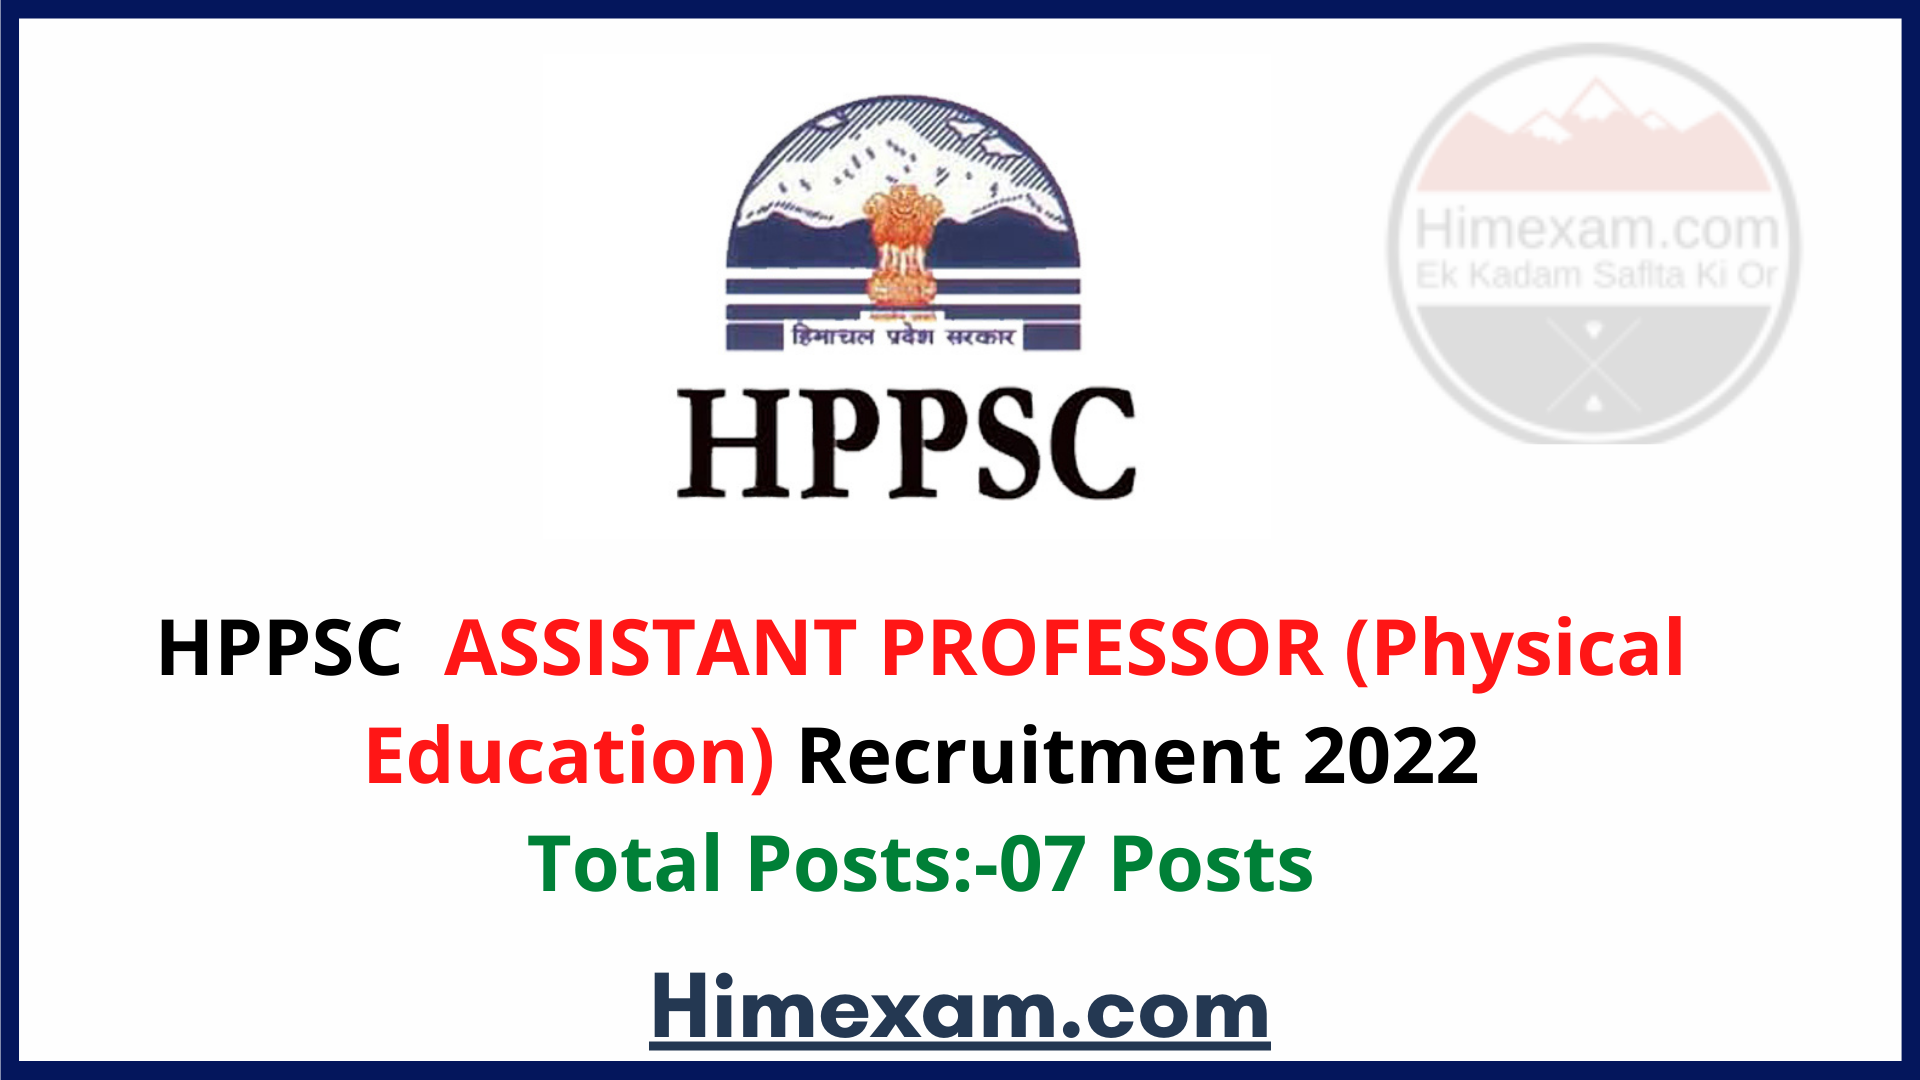 HPPSC ASSISTANT PROFESSOR (Physical Education) Recruitment 2022